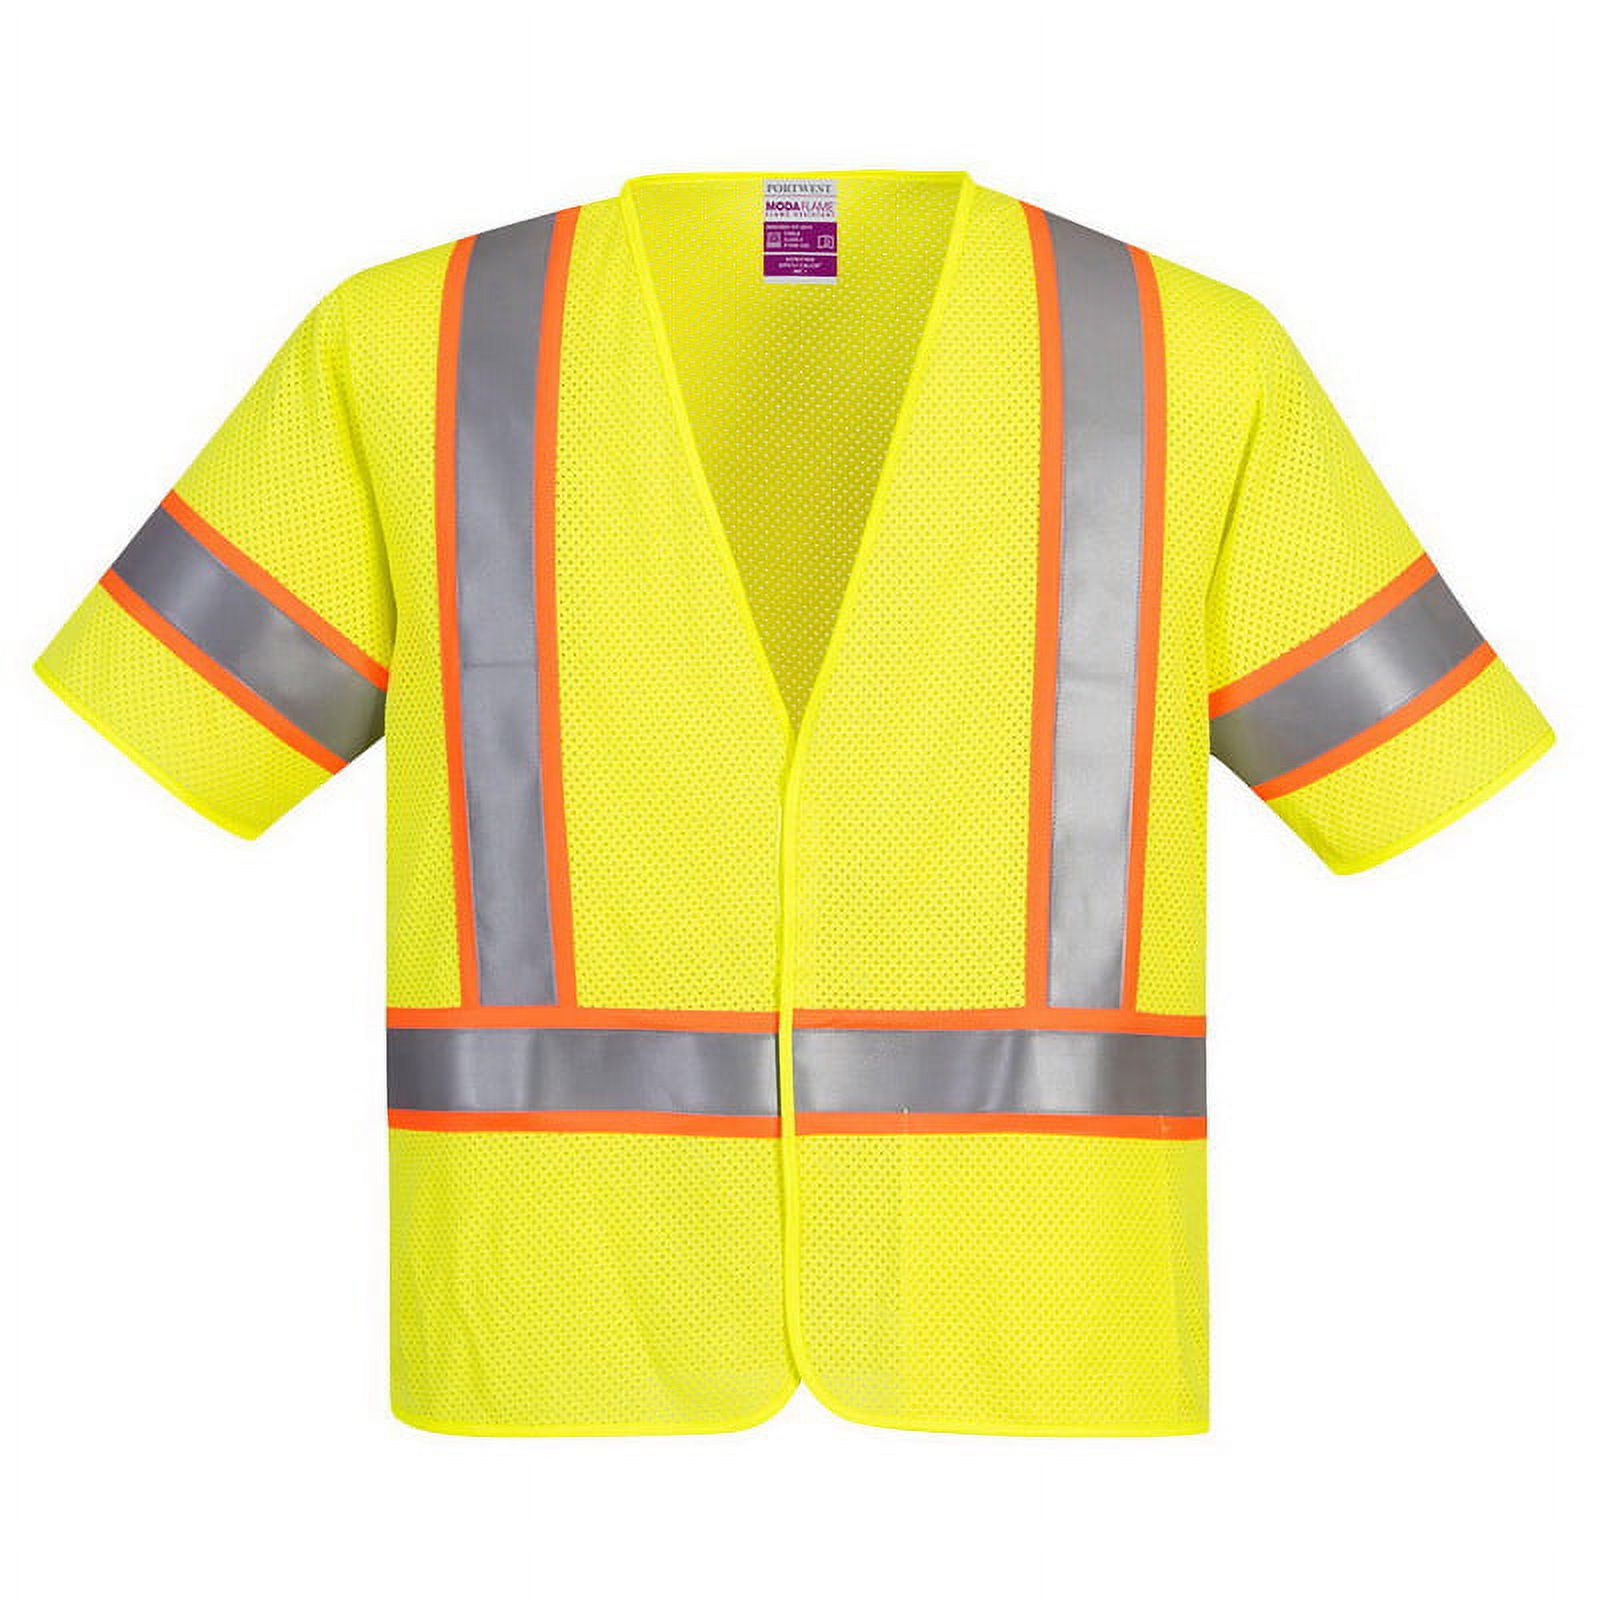 Portwest UFR24 Class FR Mesh Safety Vest Yellow, 4X-Large